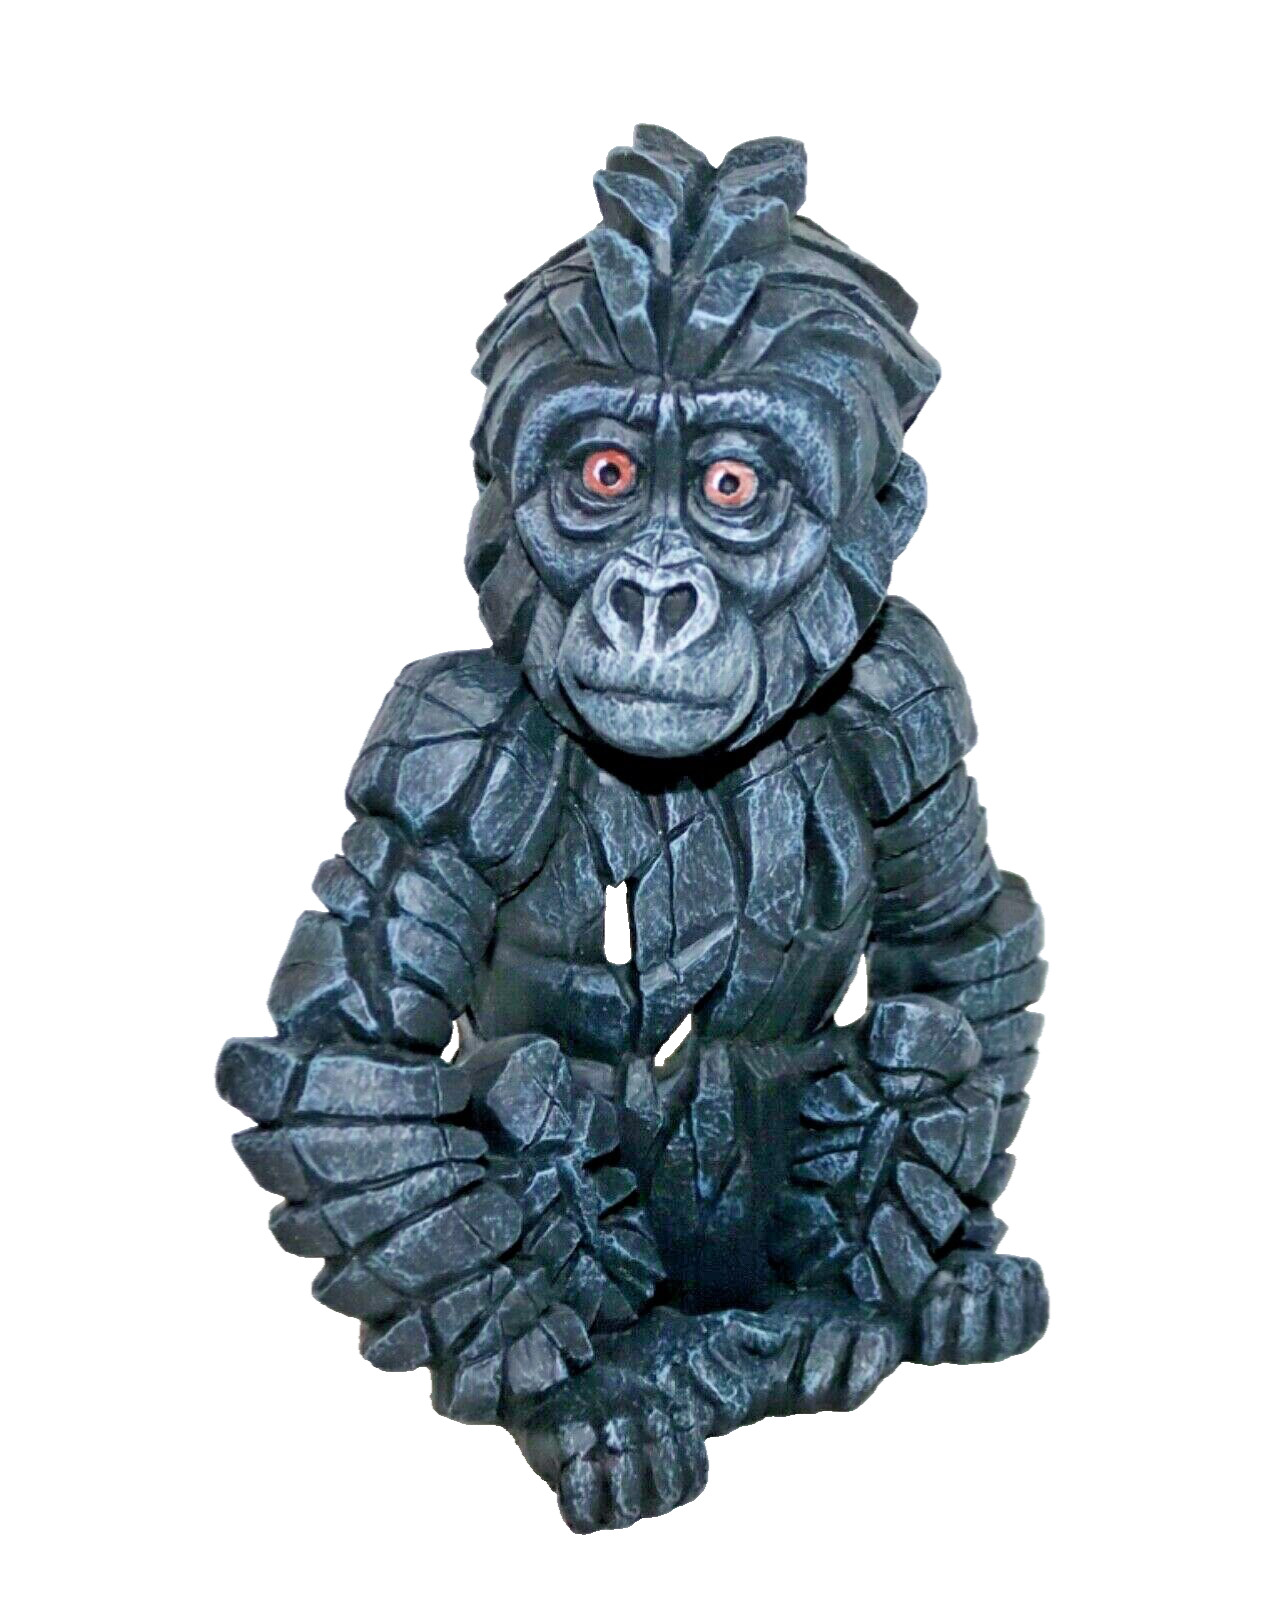 Baby Gorilla ~ Edge Sculpture ~ By Matt Buckley ~ 9.25”H Enesco Dept 56 Stunning